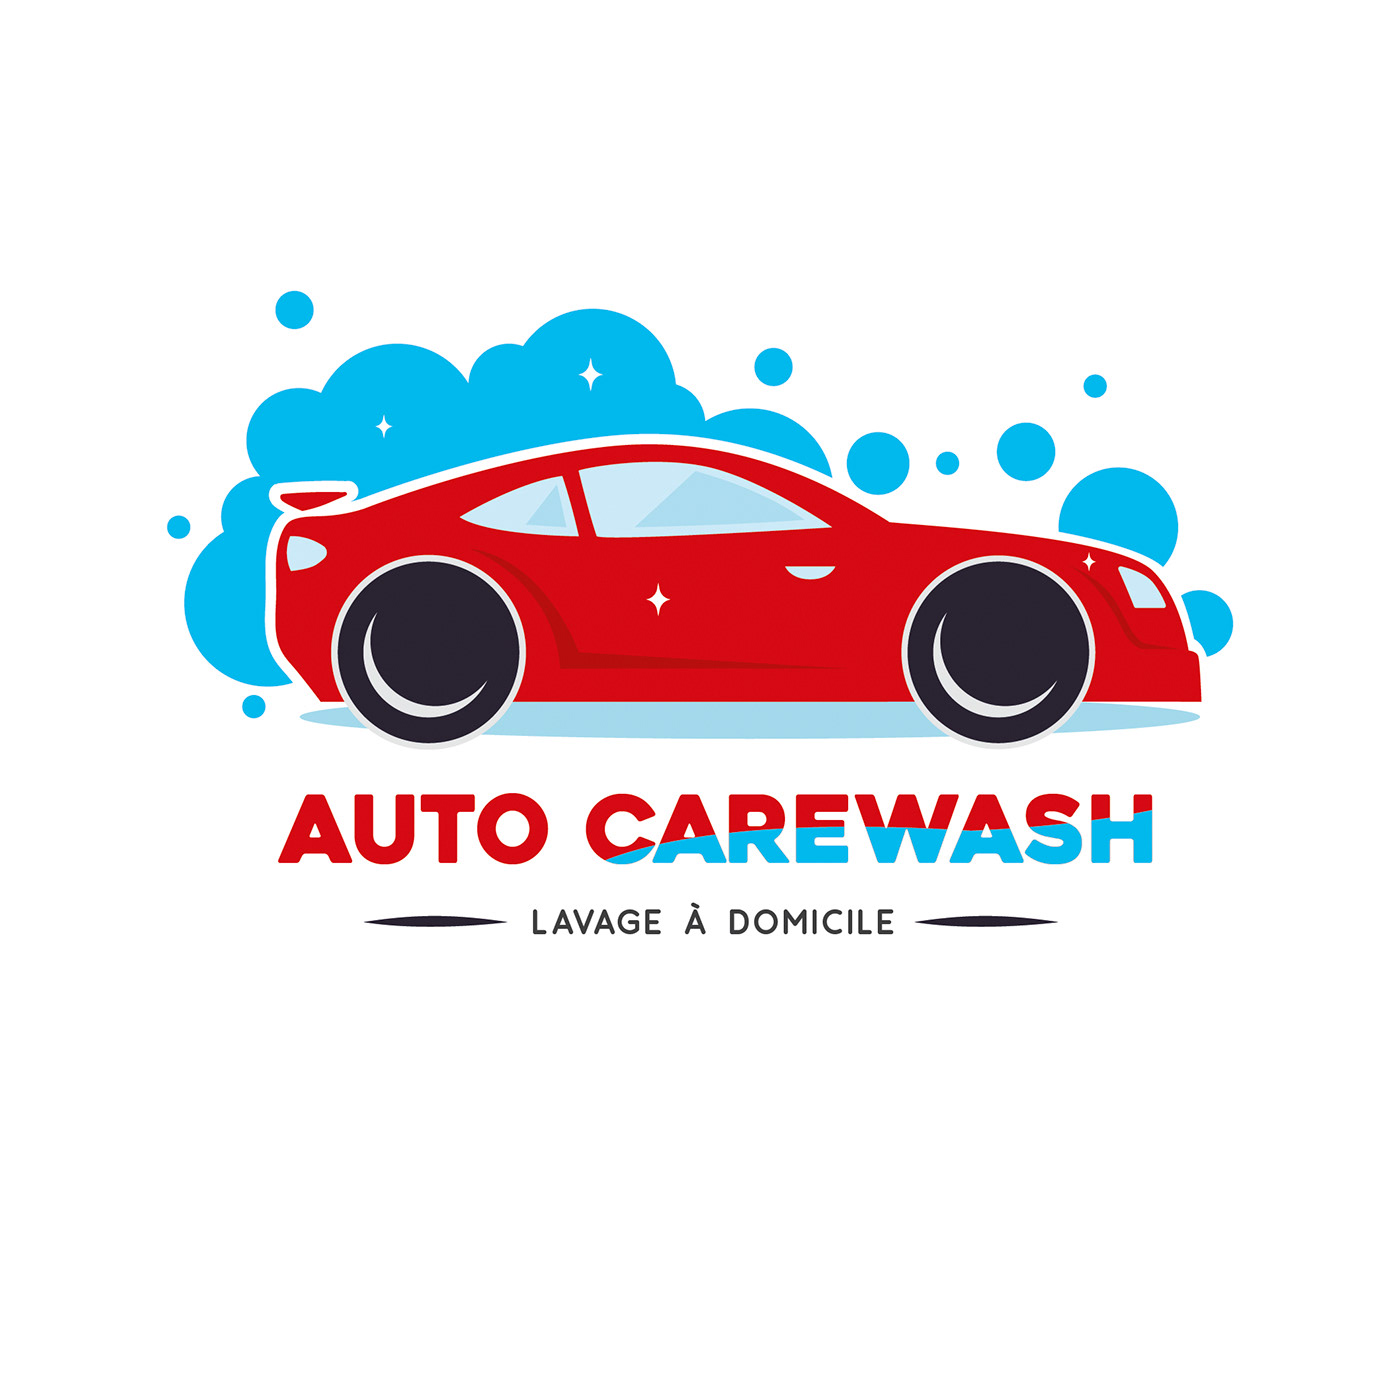 Carwash Auto red blue black logo